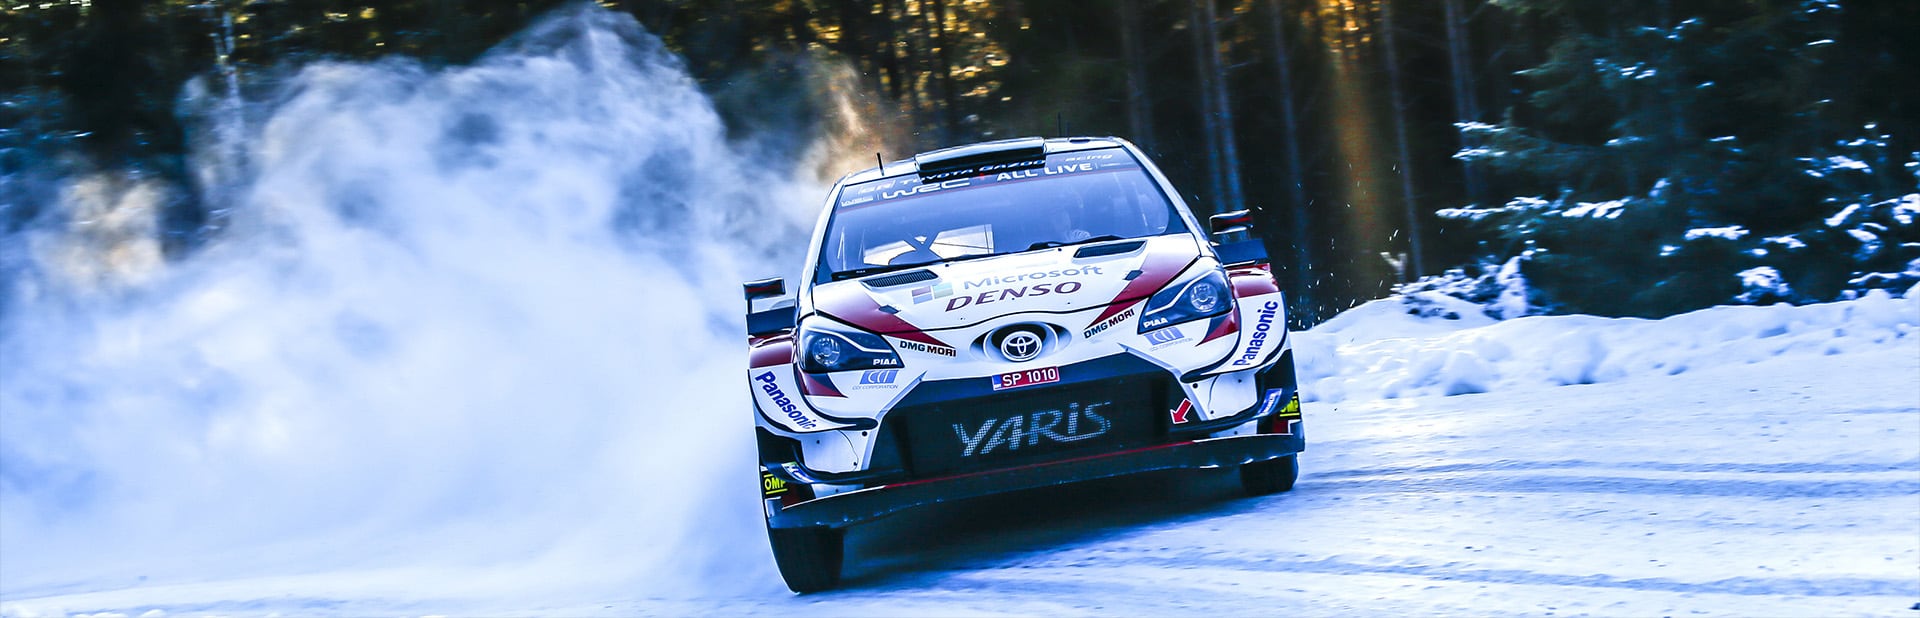 WRC 第2戦 ラリー・スウェーデン デイ3 エバンスがスウェーデン初優勝で選手権首位に浮上 ロバンペラは総合3位、オジエは総合4位でフィニッシュ